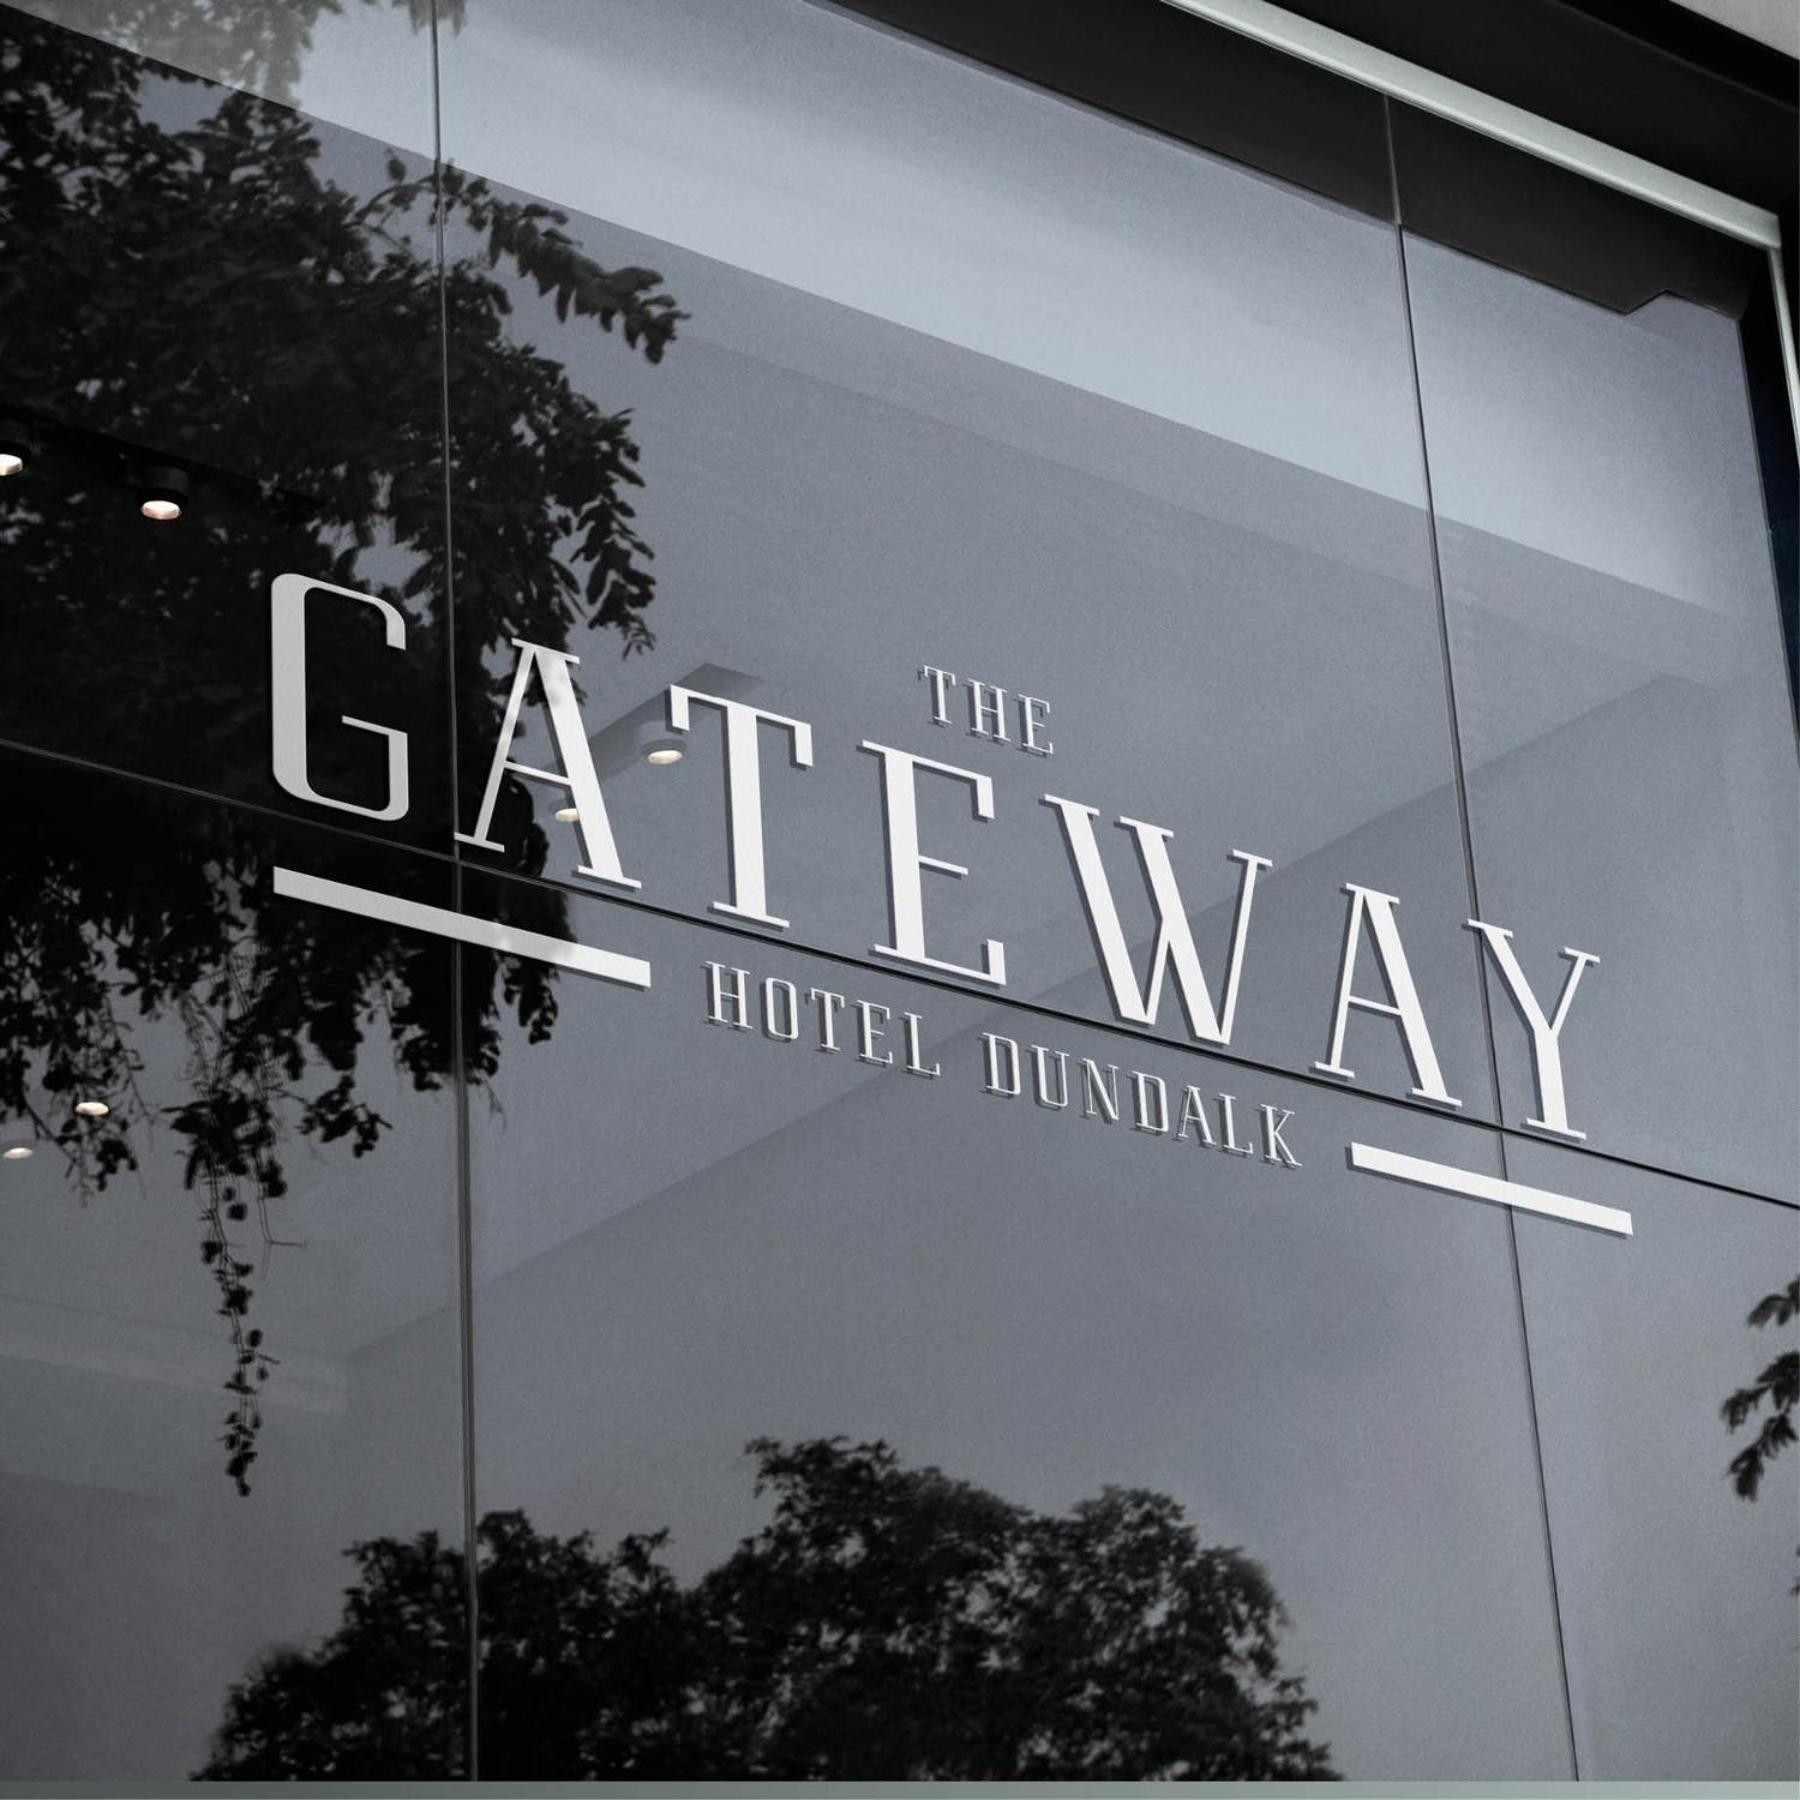 The Gateway Hotel Dundalk